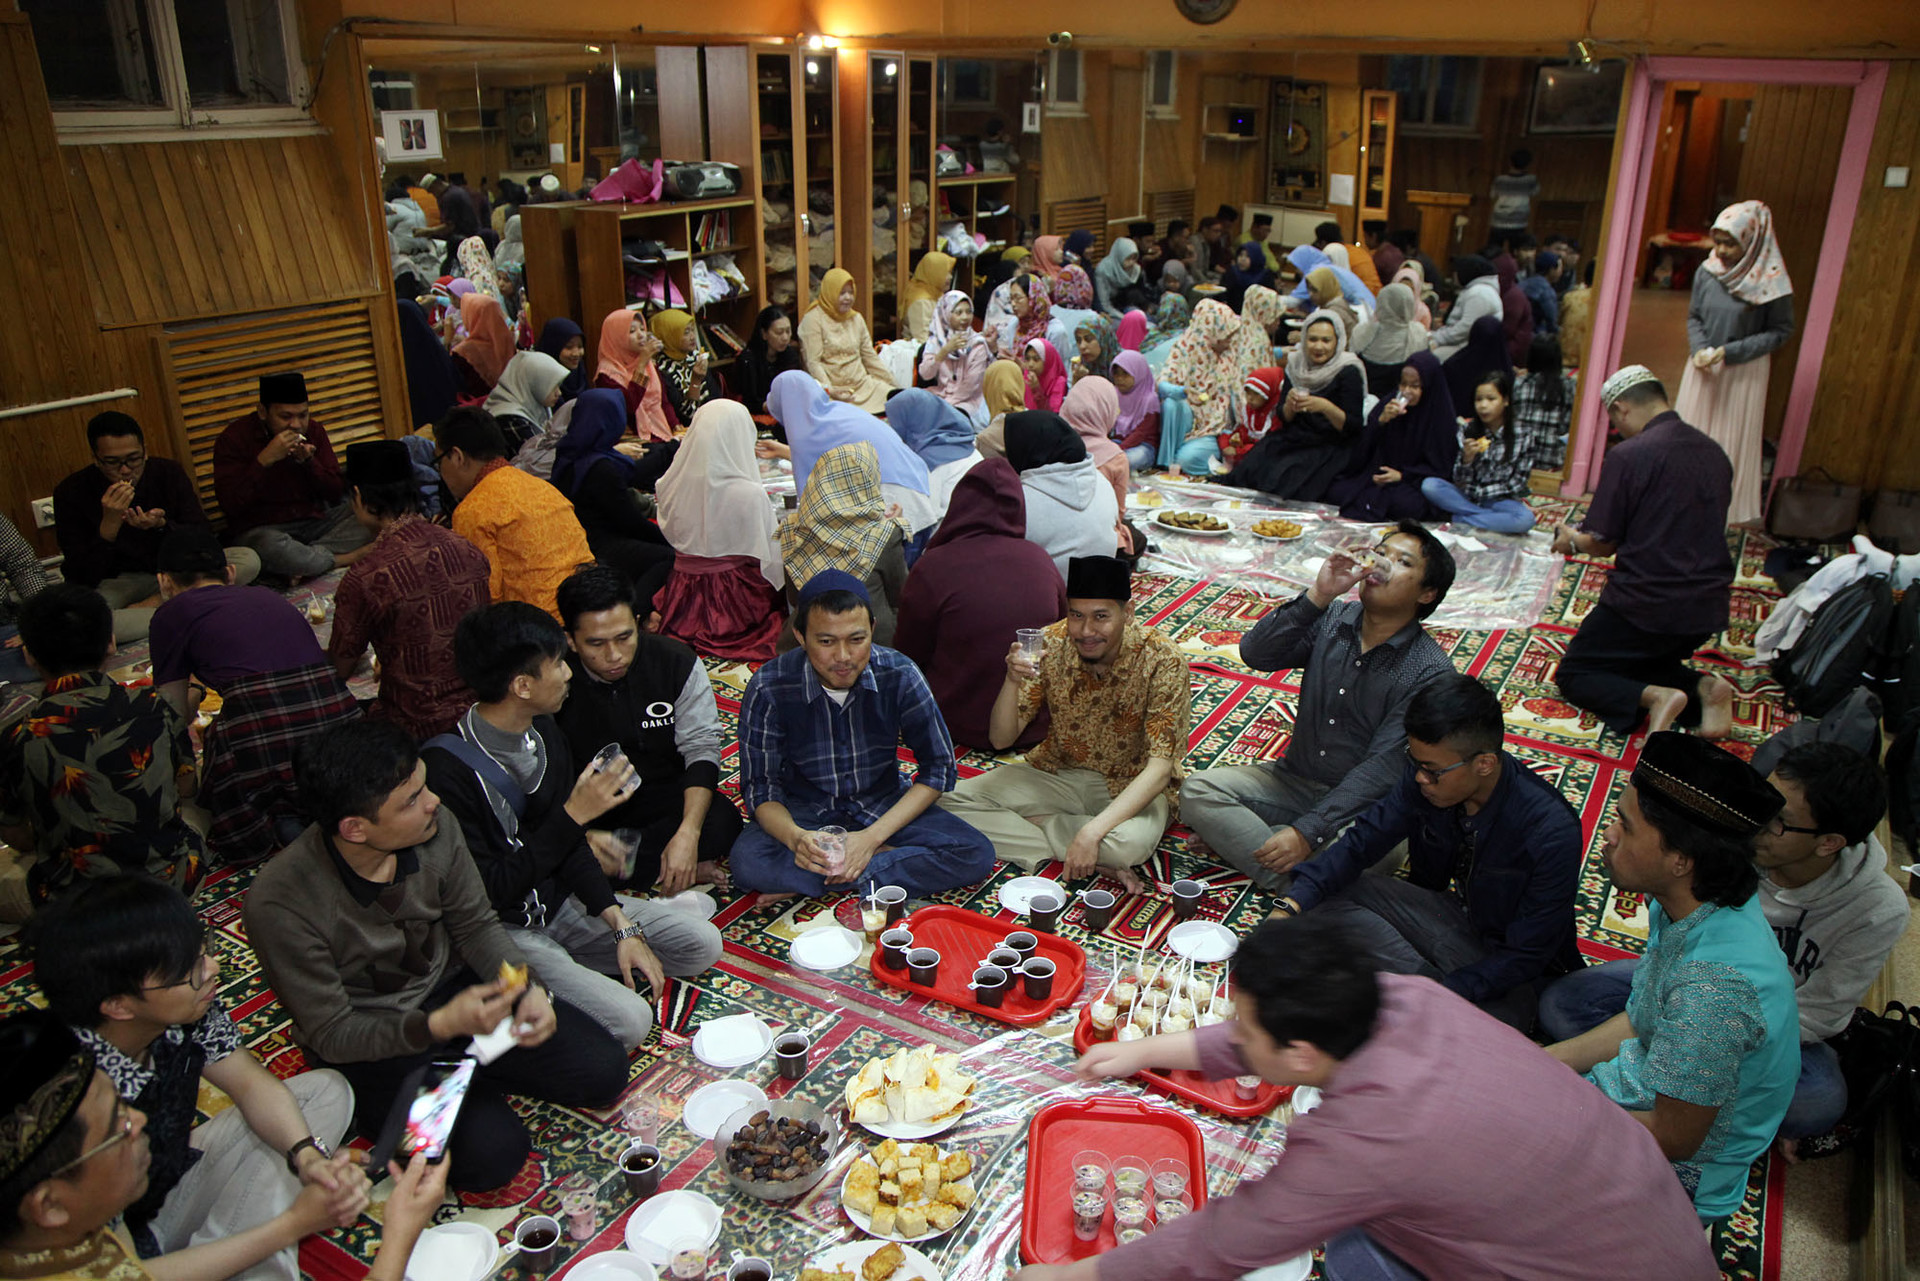 Puluhan warga negara Indonesia (WNI) mengikuti acara berbuka puasa bersama yang diselenggarakan oleh Himpunan Persaudaraan Islam Indonesia (HPII) di Mushola Kedutaan Besar Republik Indonesia (KBRI) Moskow, Rusia, Sabtu (26/5/2018).